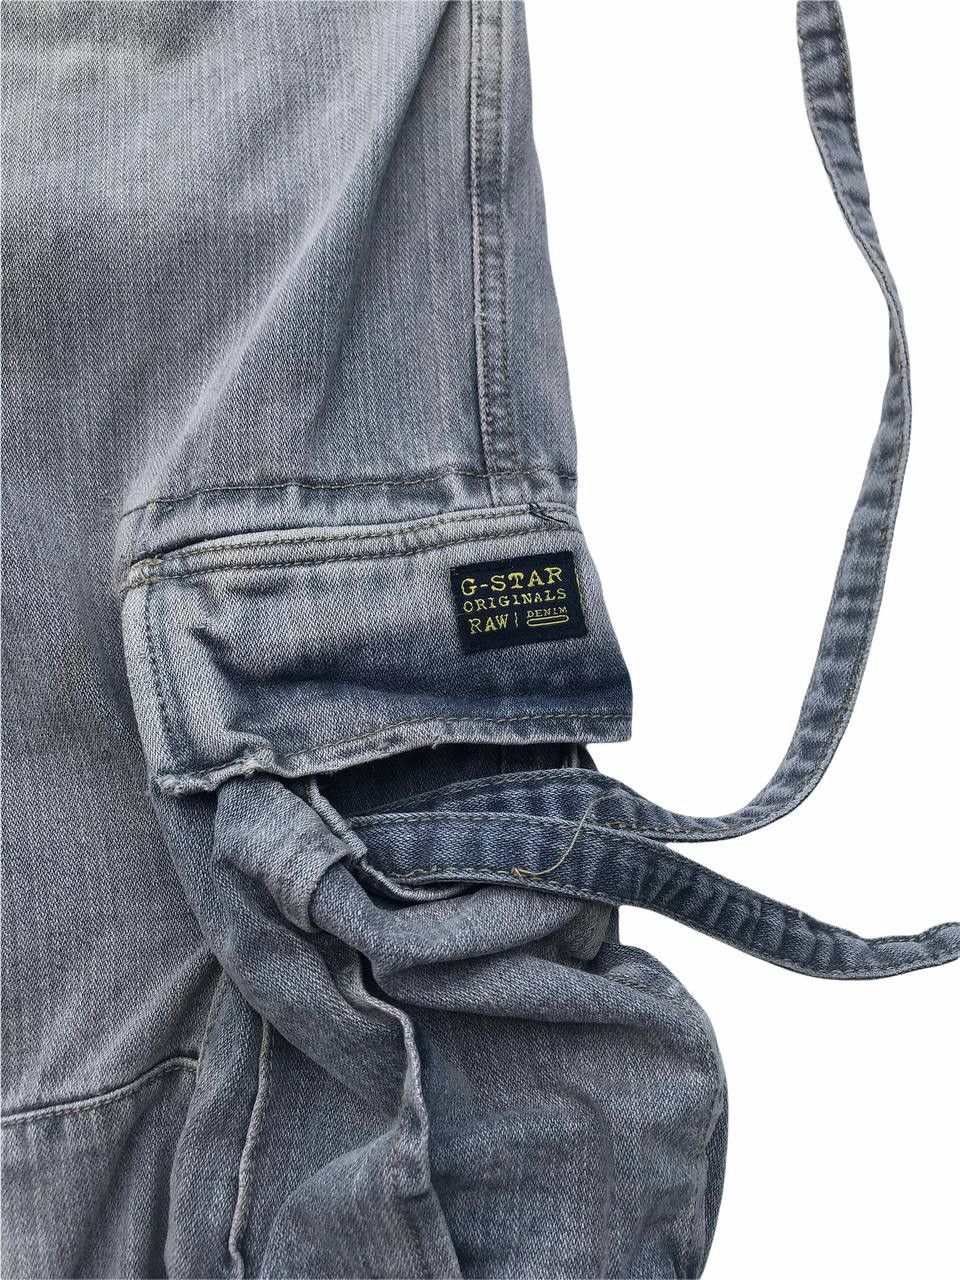 Gstar Gstar Denim Cargo Multipocket Streetwear Fashion Pants Size US 31 - 6 Thumbnail